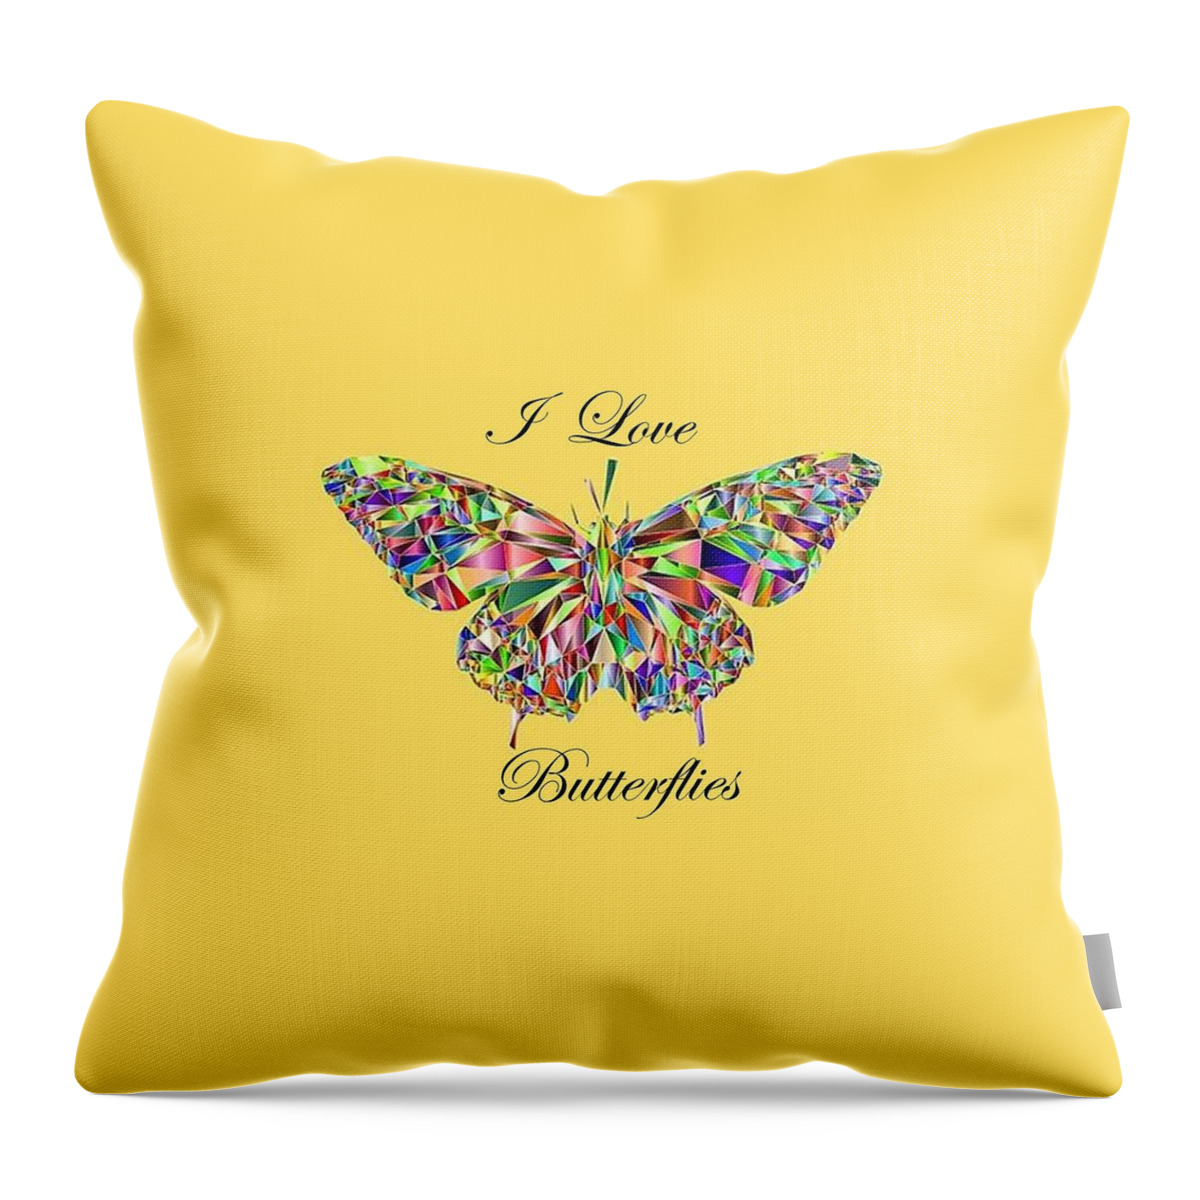 Butterfly Throw Pillow featuring the photograph I Love Butterflies by Nancy Ayanna Wyatt